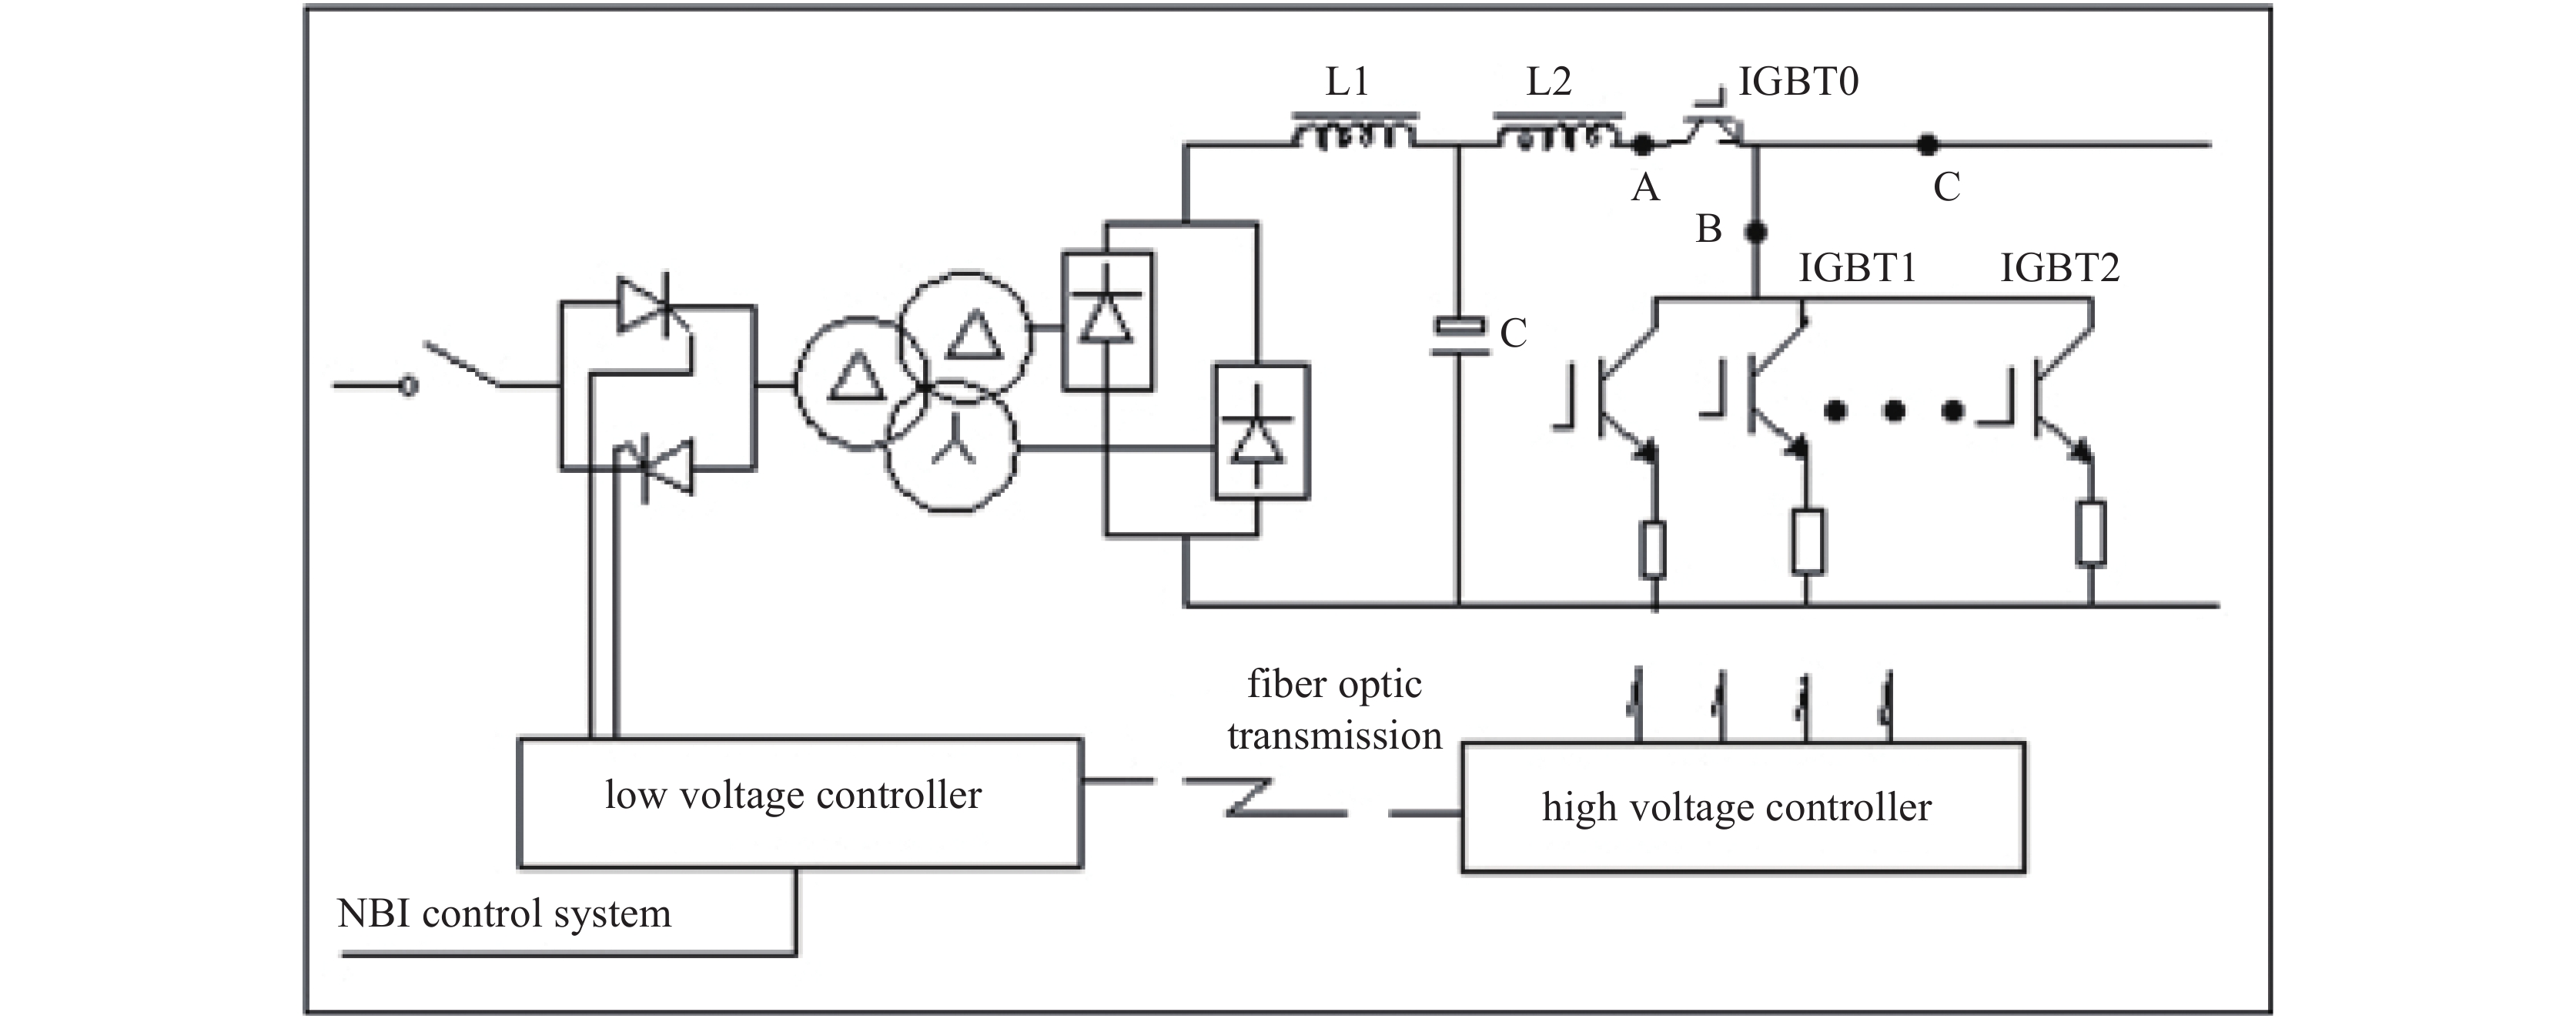 Main circuit diagram of NBI arc power supply of HL-2A